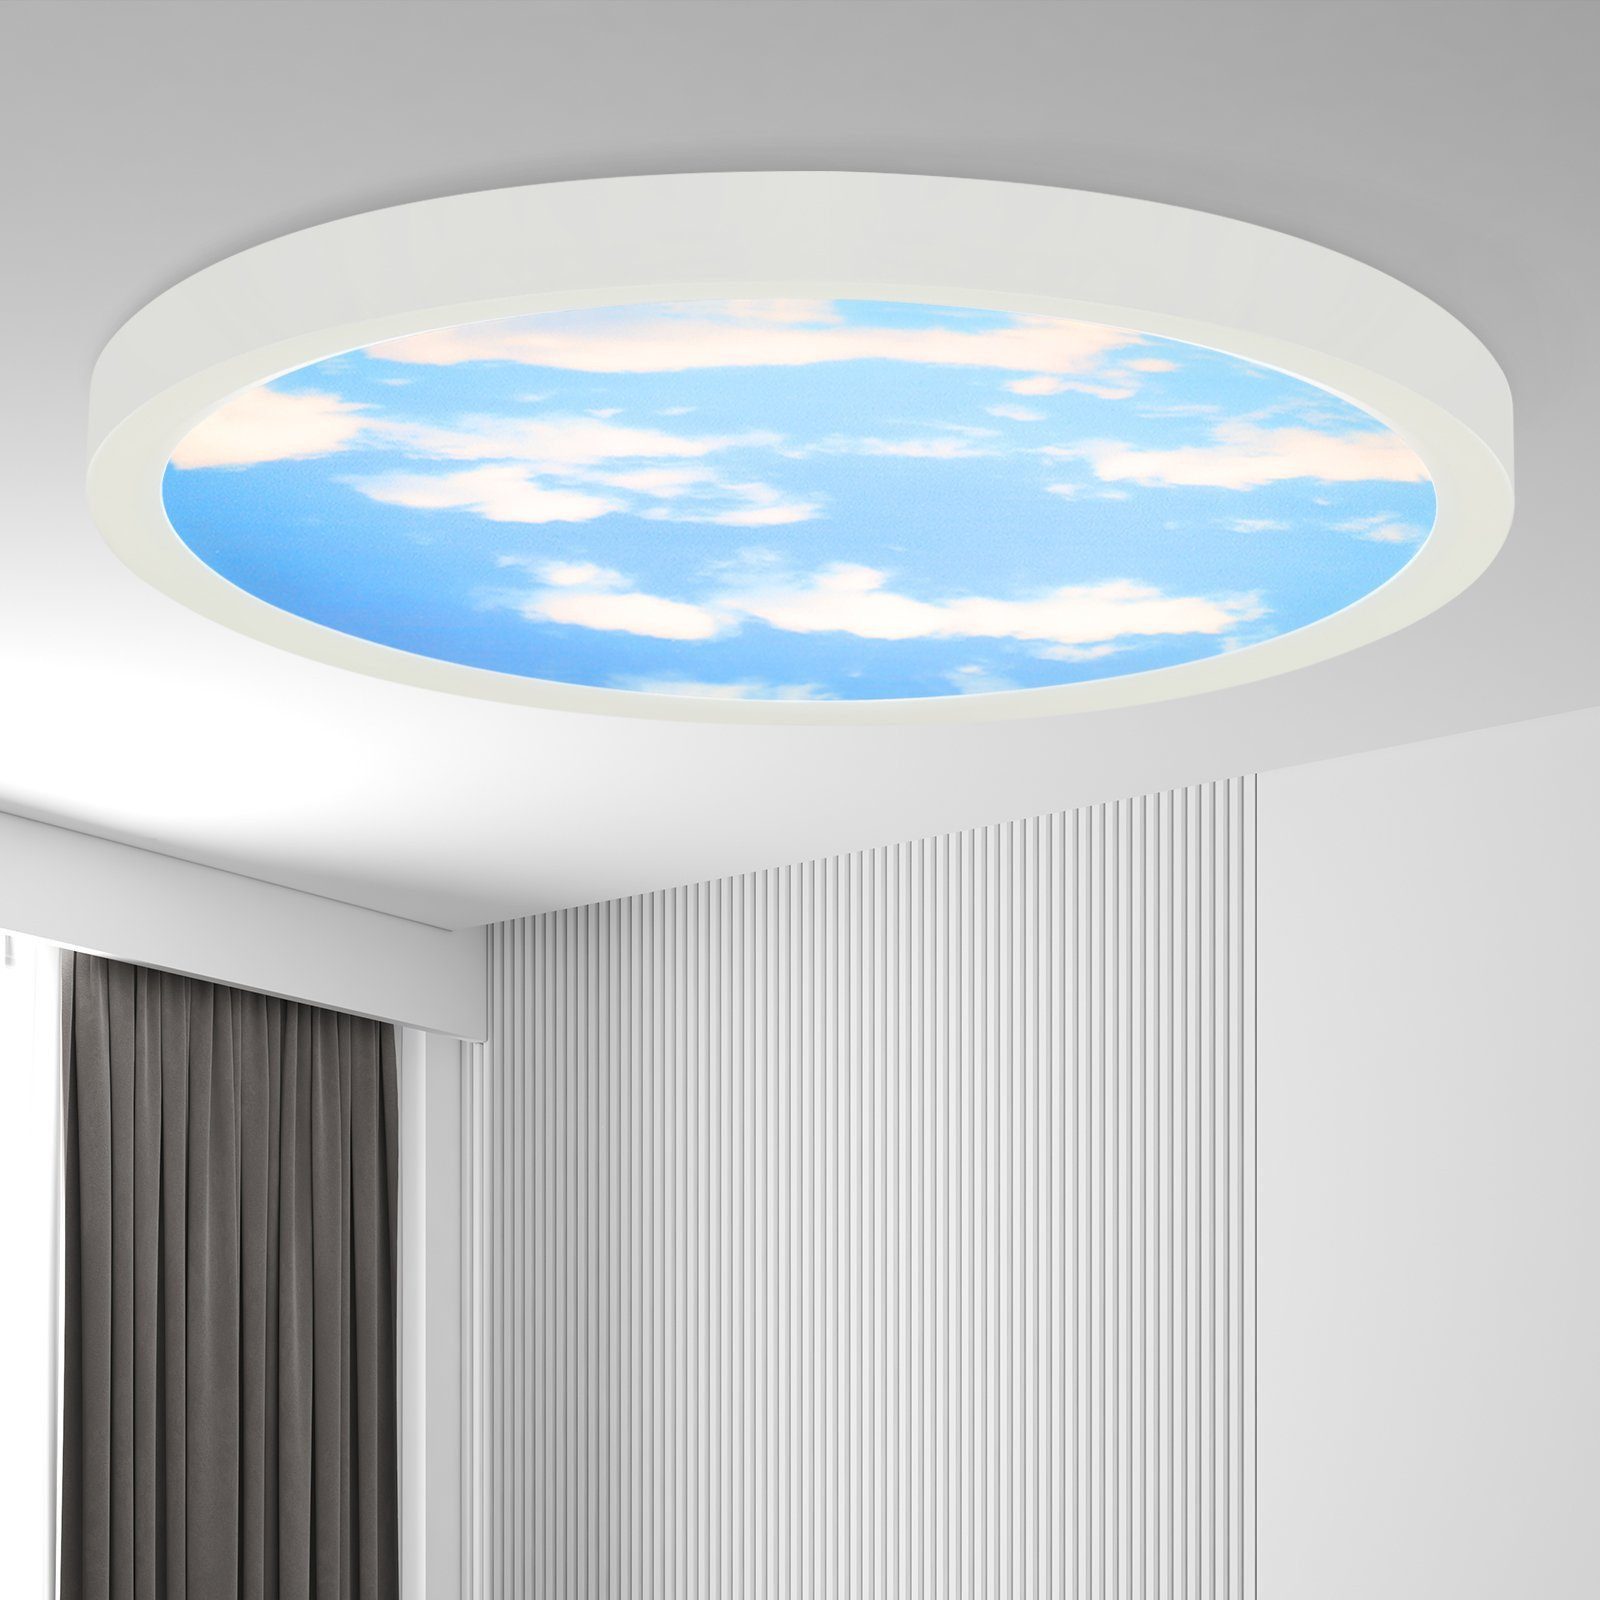 Nettlife LED Deckenleuchte Kinderzimmer Flach 23cm Himmel Lampe Deckenbeleuchtung 23 W, IP44 Wasserdicht, LED fest integriert, Neutralweiß, Schlafzimmer Badezimmer Küche Flur